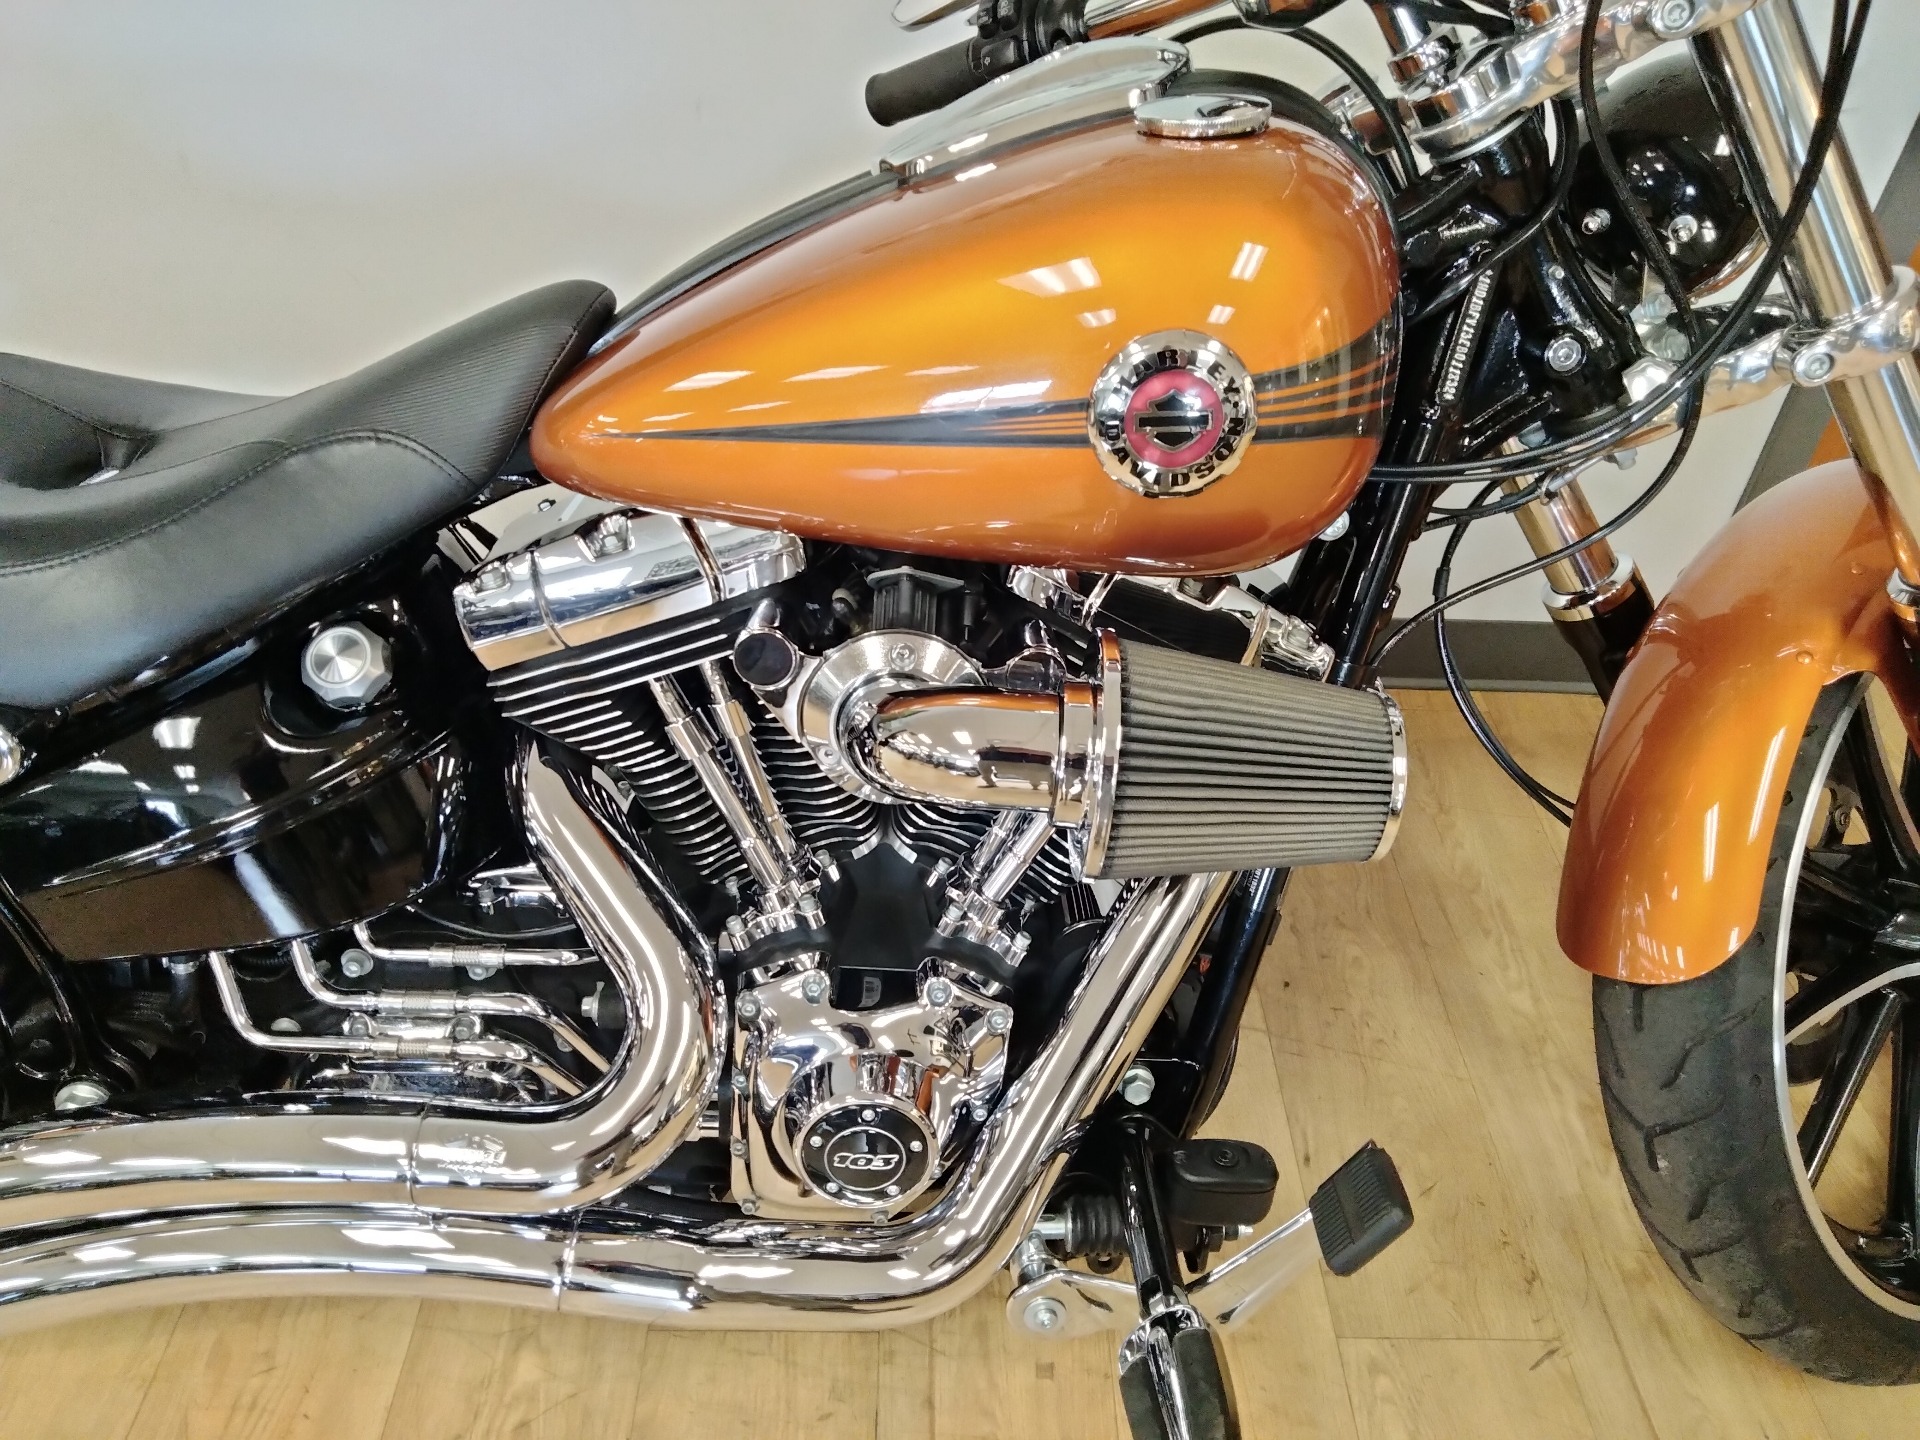 2014 Harley-Davidson Breakout® in Mahwah, New Jersey - Photo 7